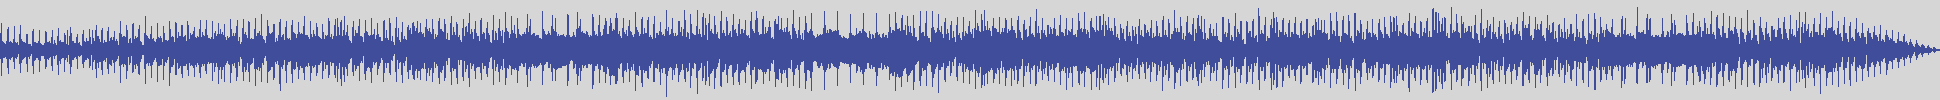 digiphonic_records [DPR013] Little Tony - Civetta [Original Mix] audio wave form